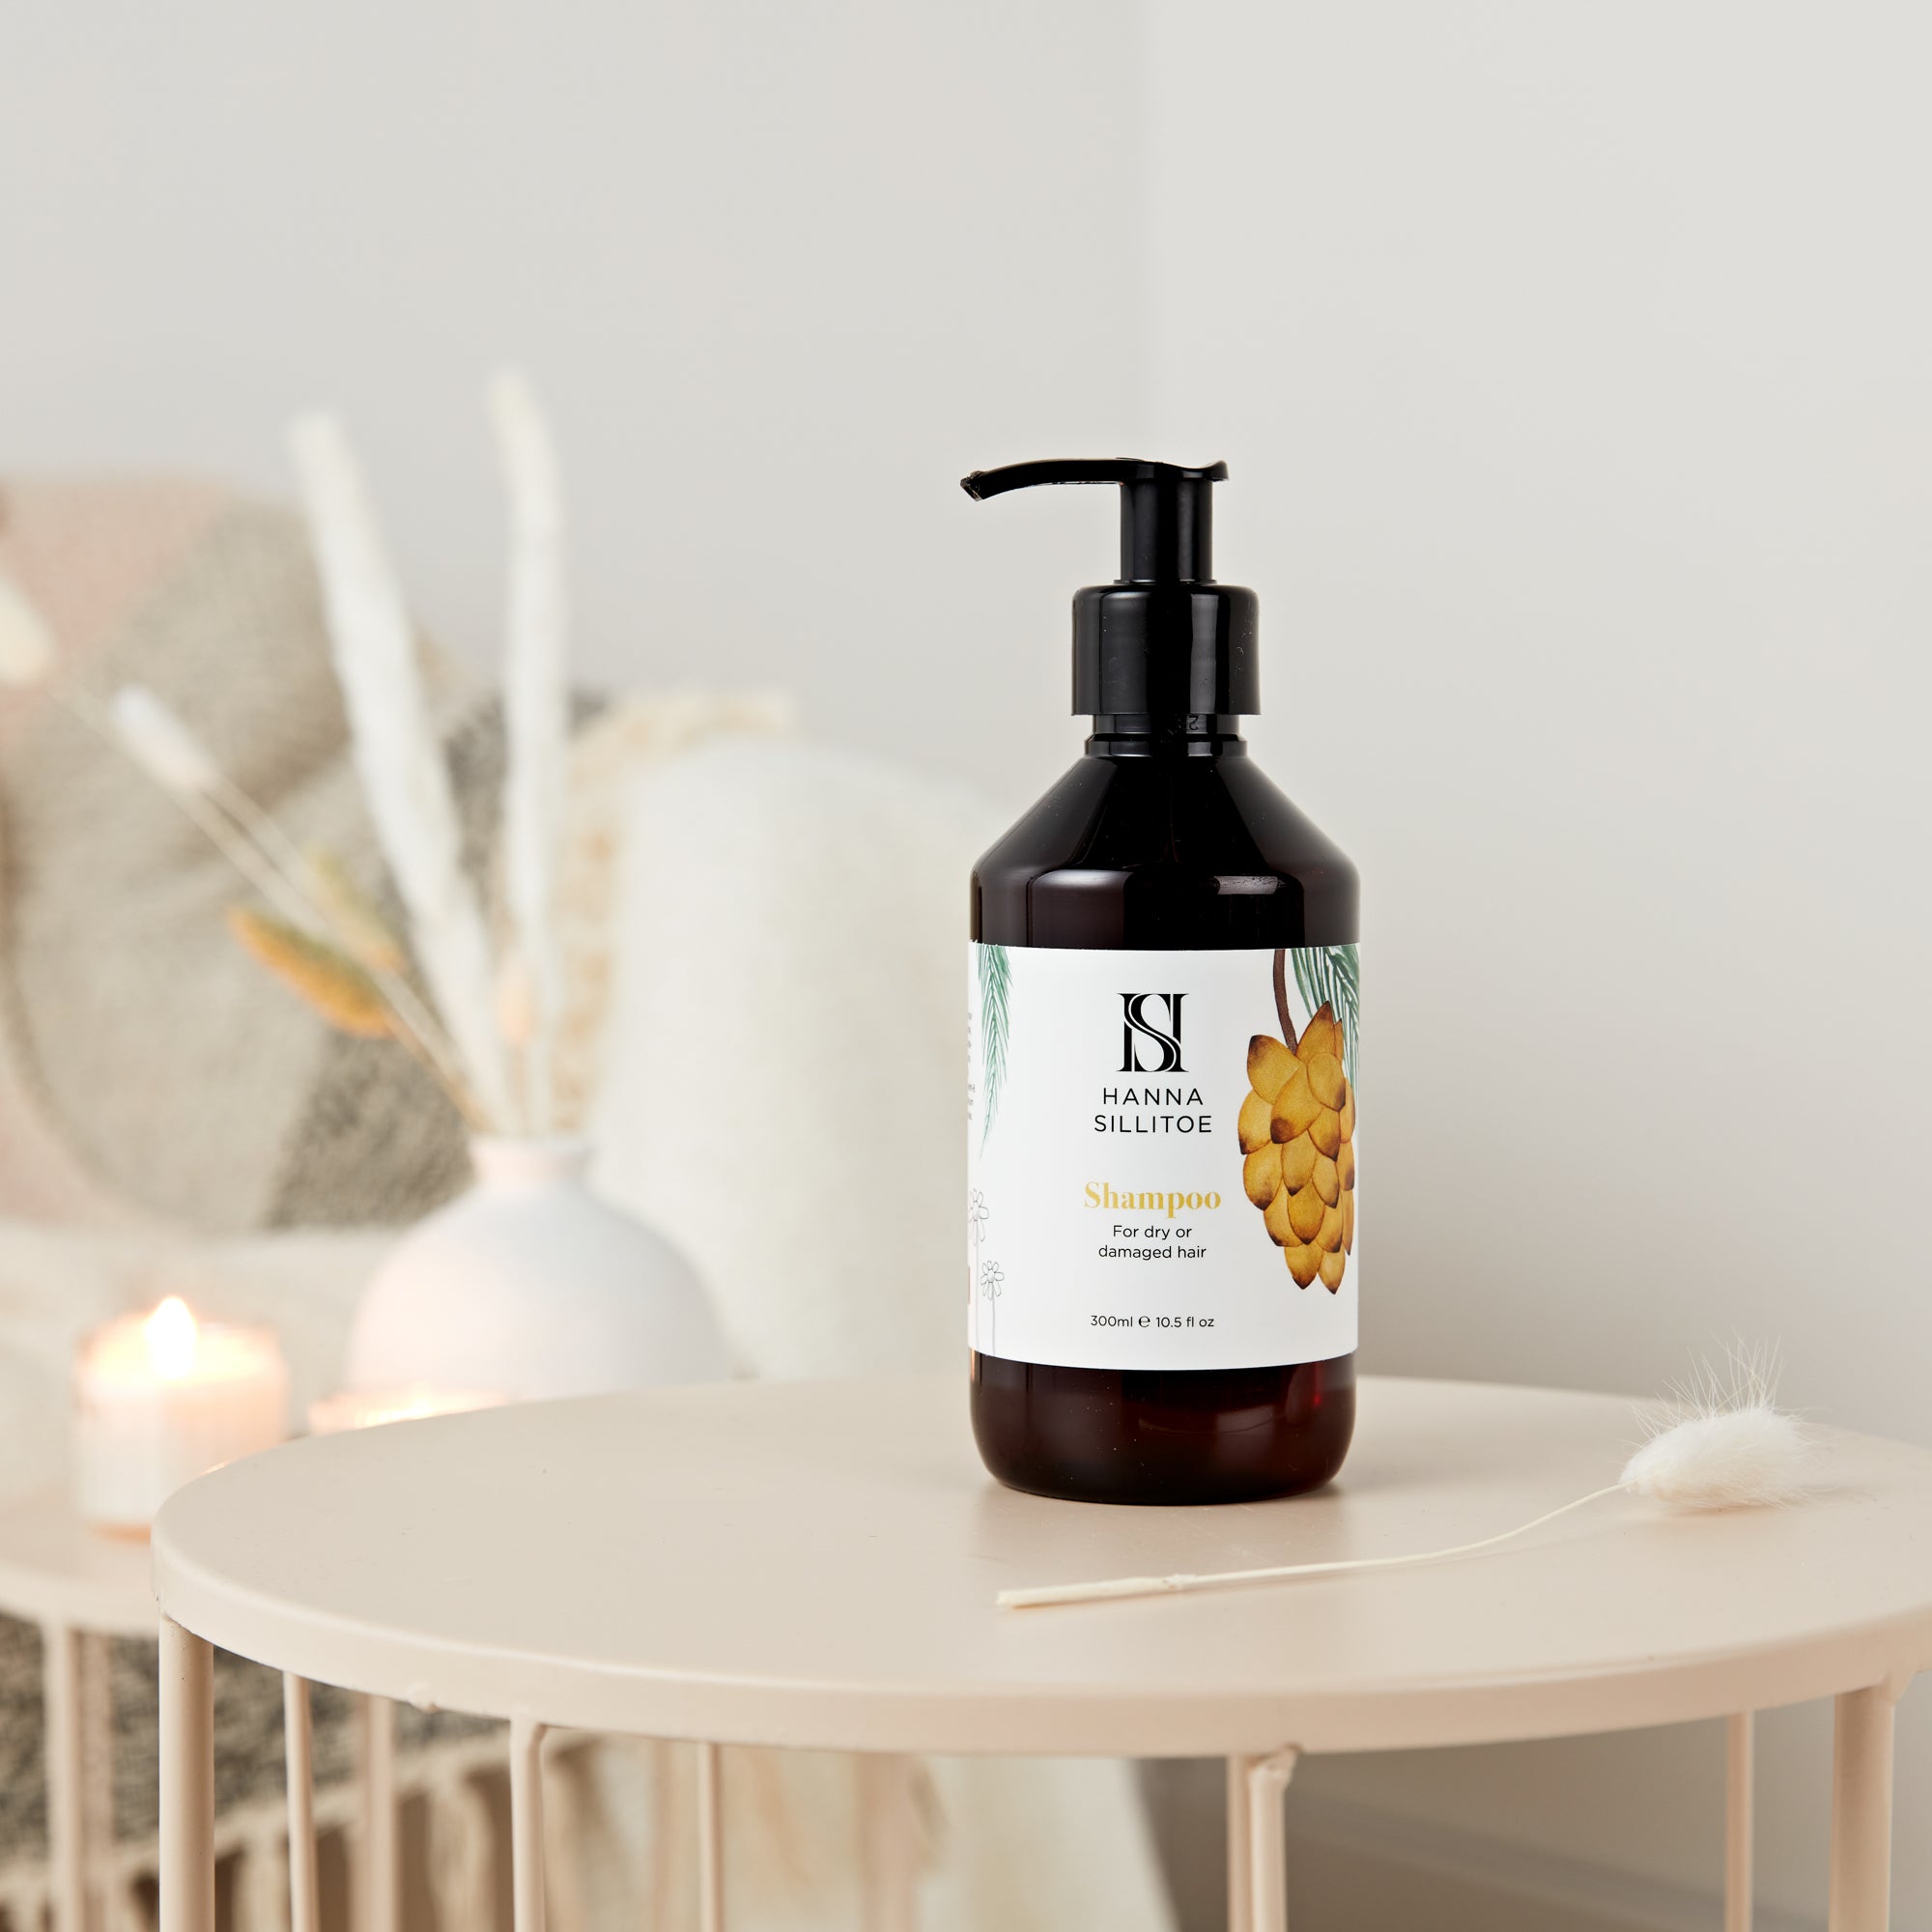 Hanna Sillitoe's gentle shampoo product image